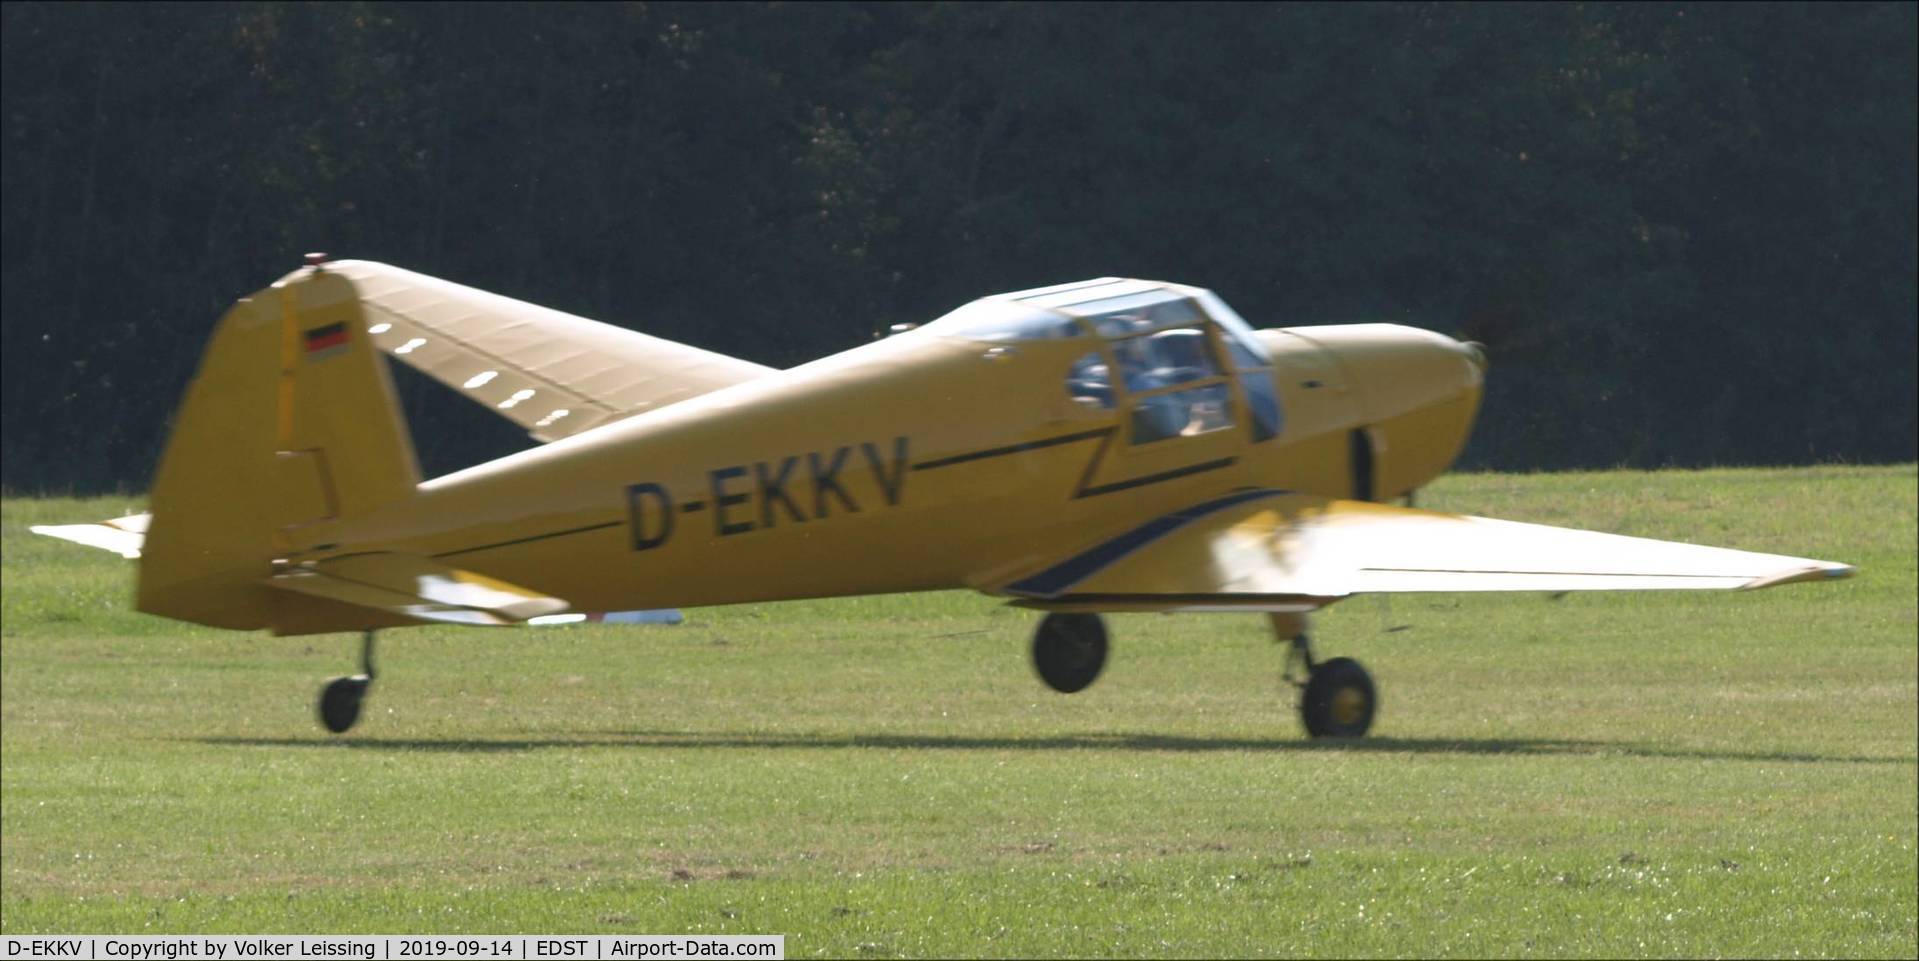 D-EKKV, 1989 Heliopolis Gomhouria Mk.6 (Bu-181) C/N 350, take off